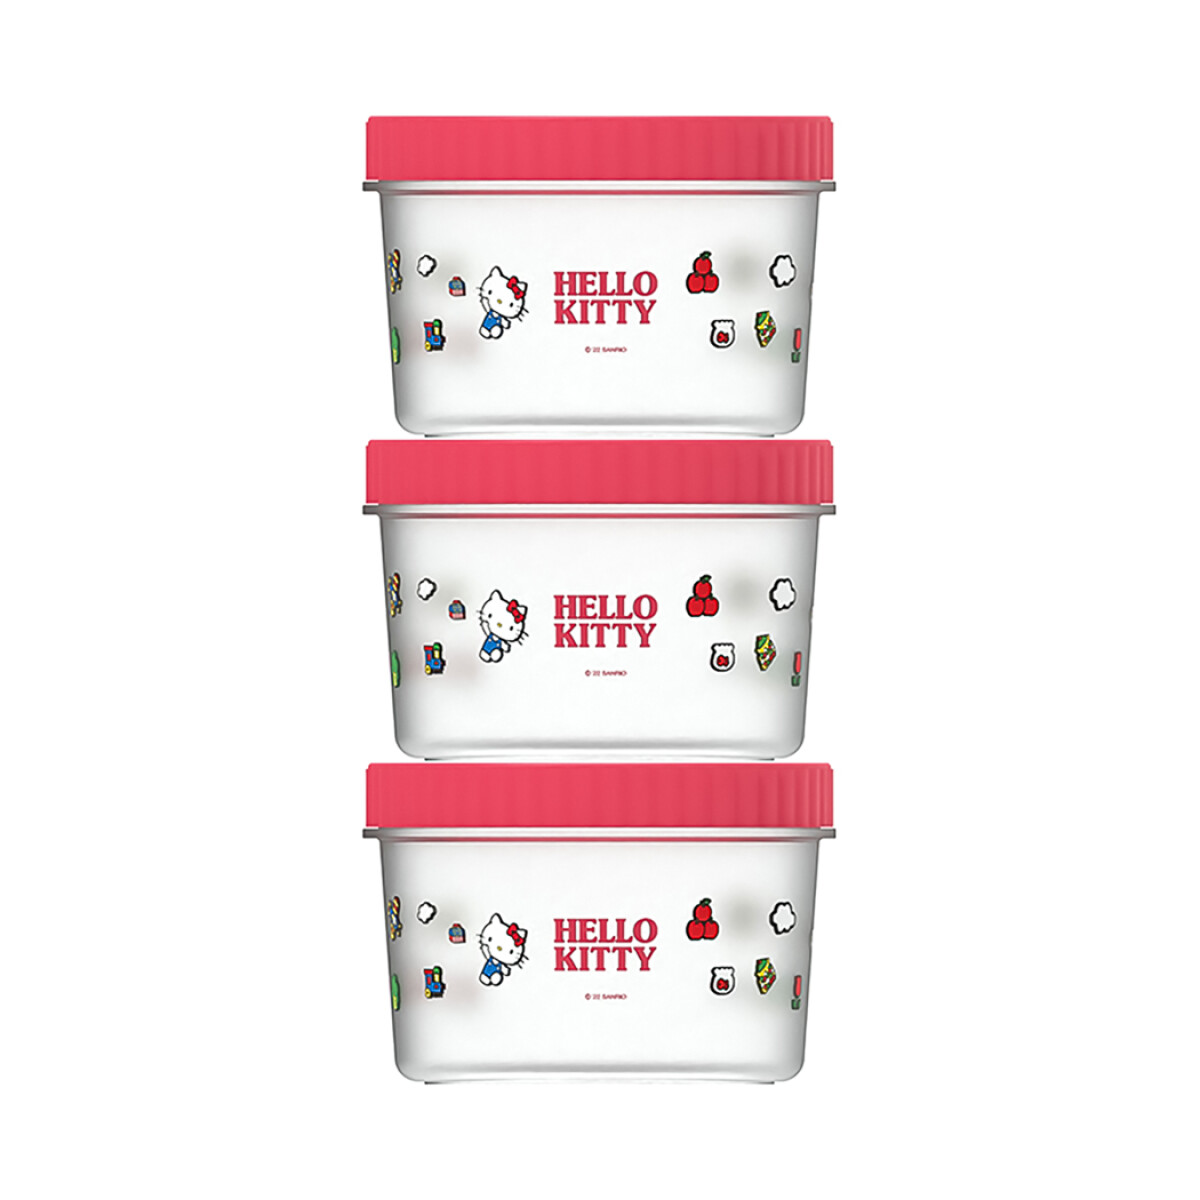 Set contenedor Hello Kitty 3pcs 